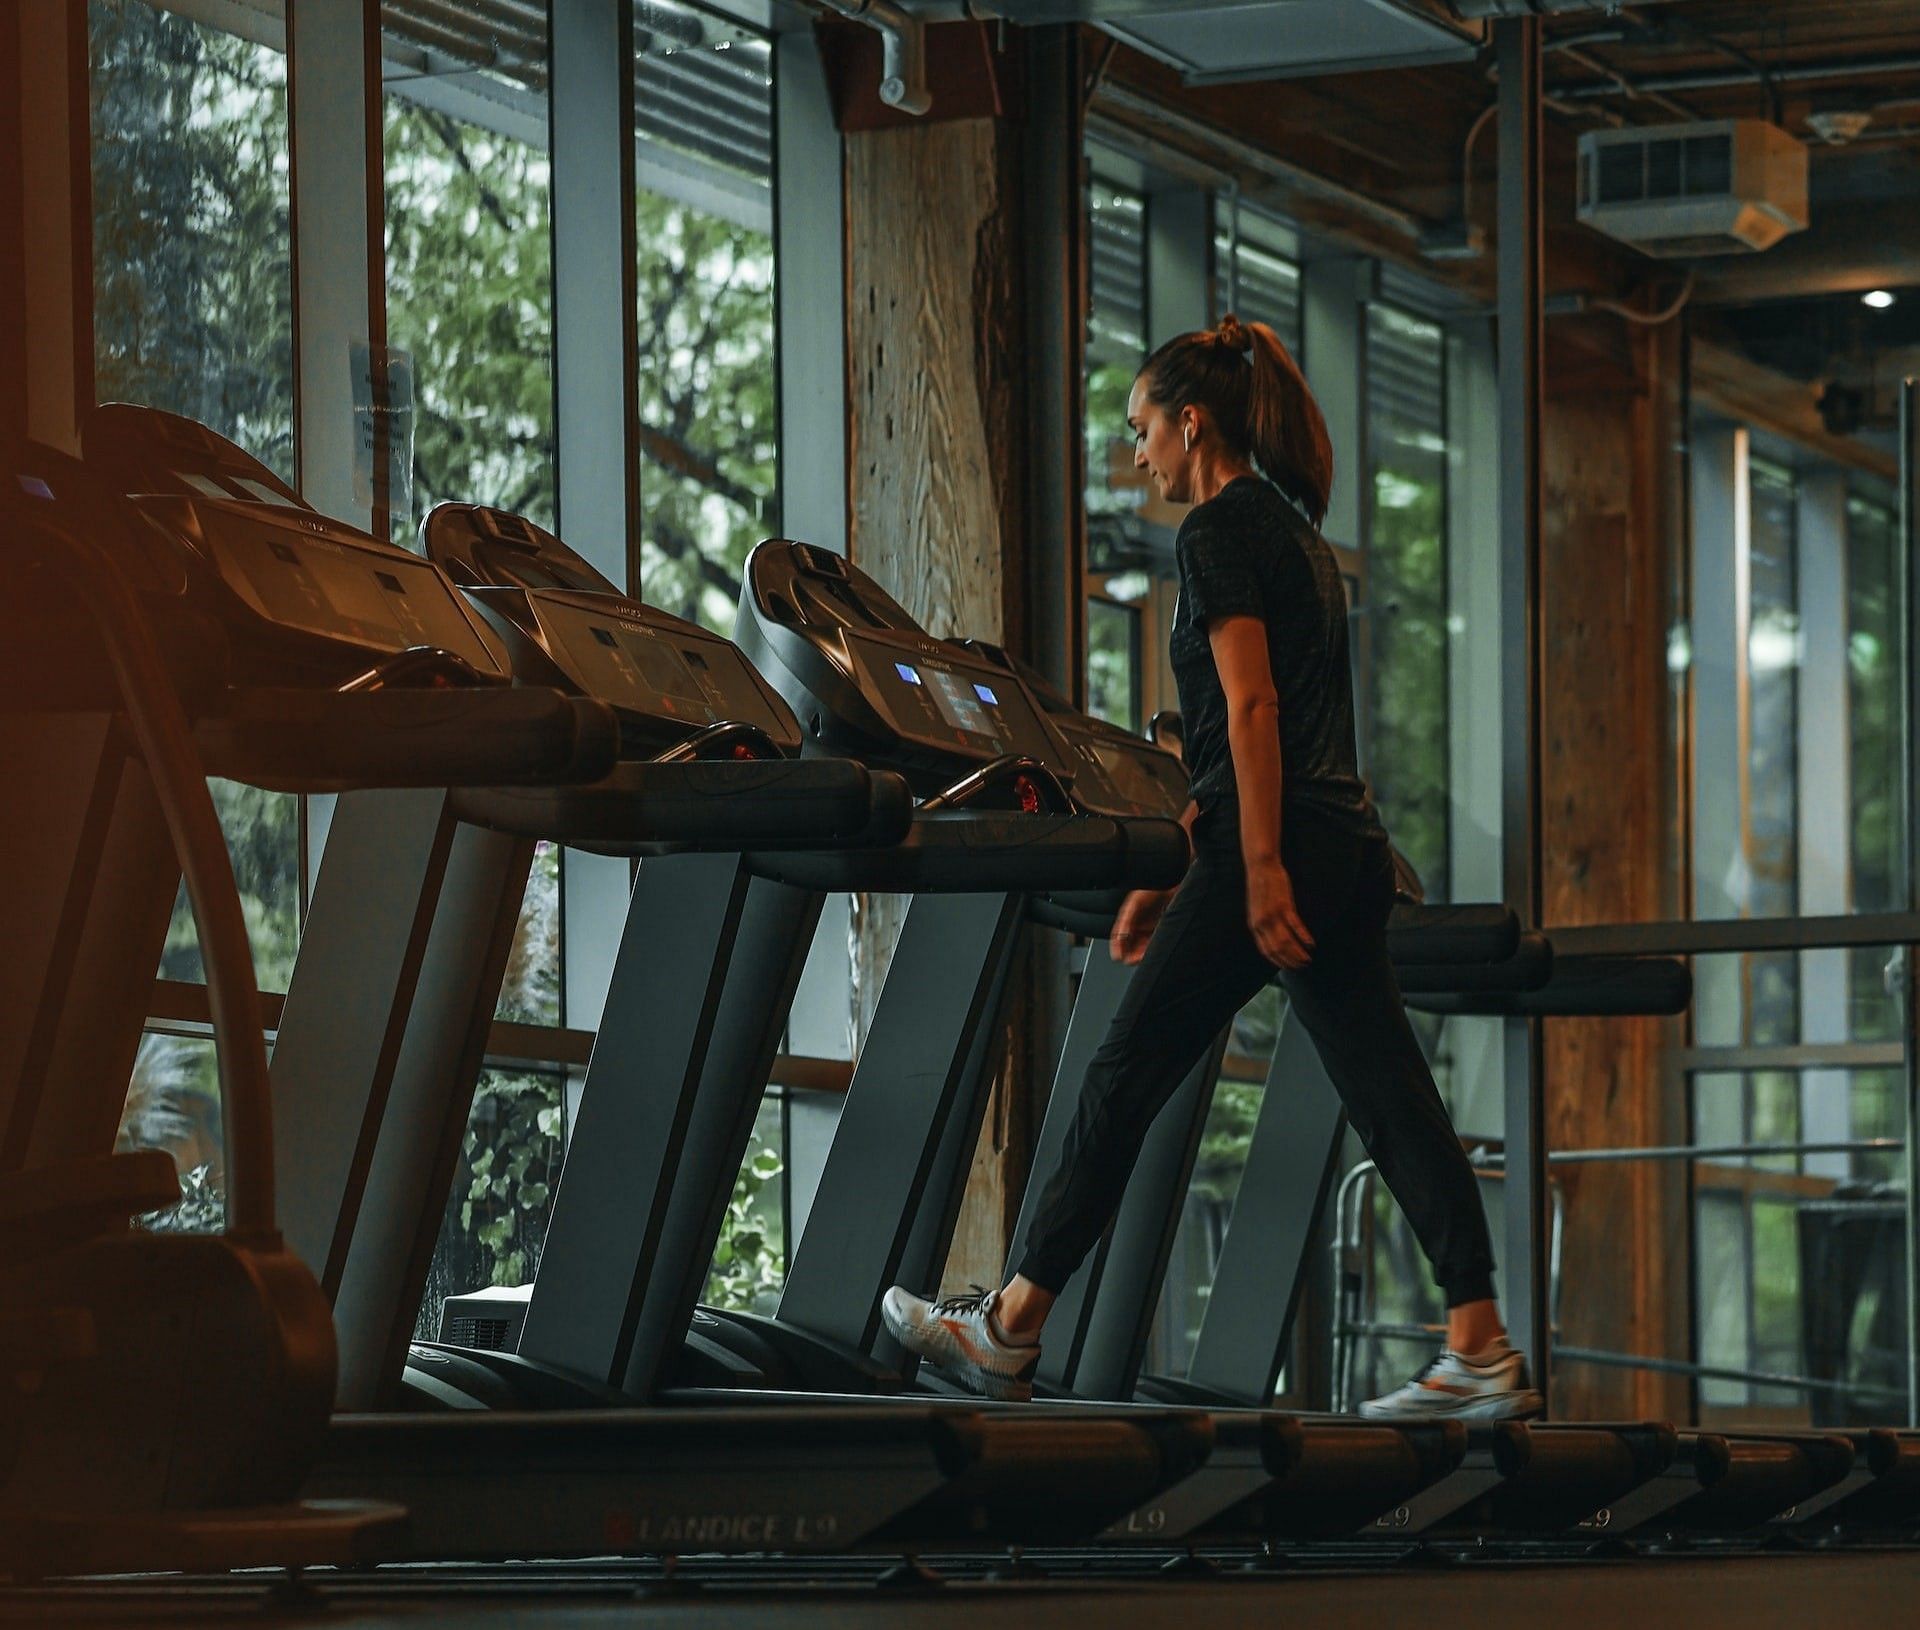 Treadmill workout (Photo via Mike Cox/Unsplash)